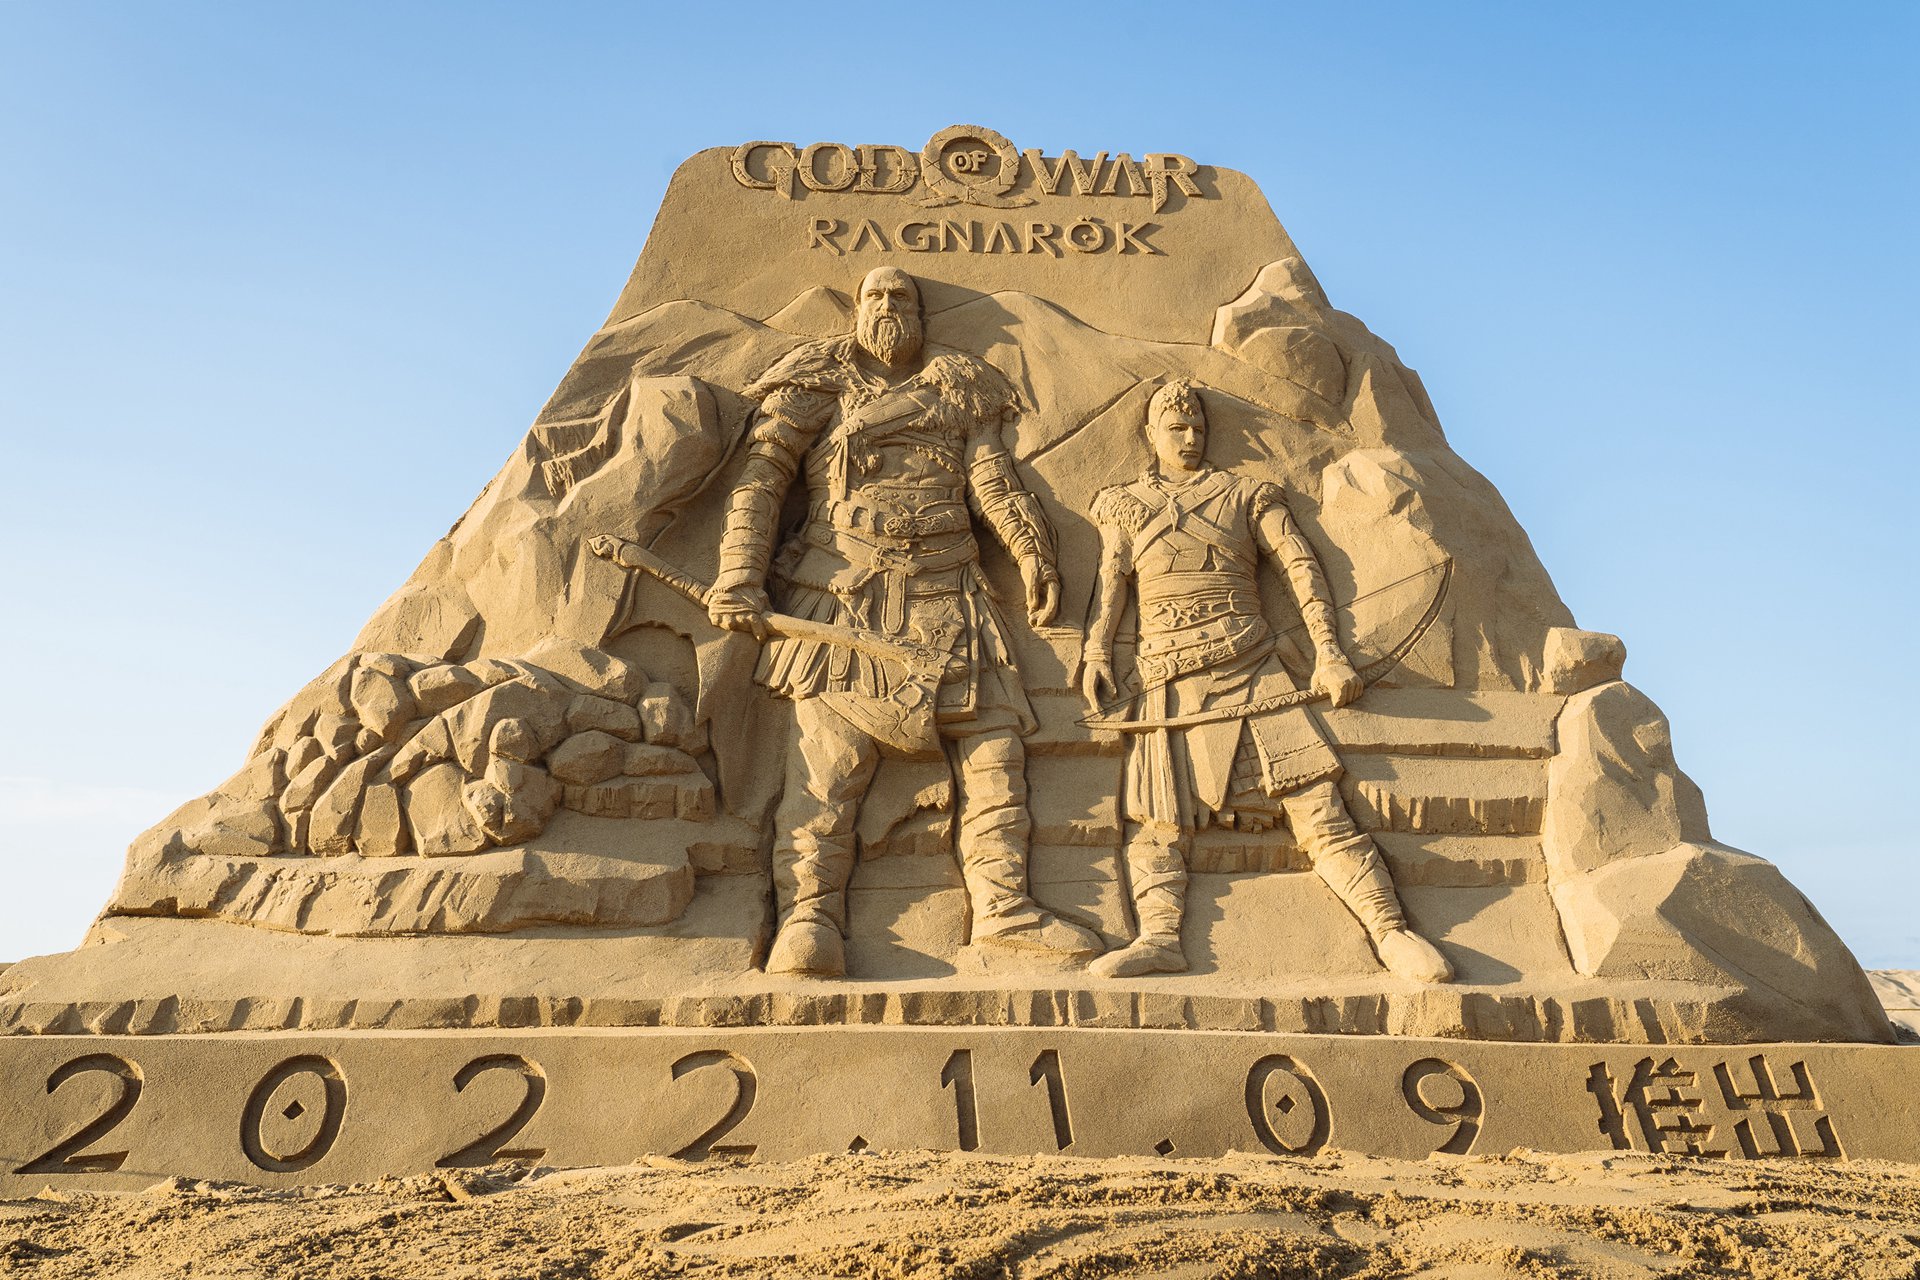 God-of-War-Ragnarok_Sand-Sculpture